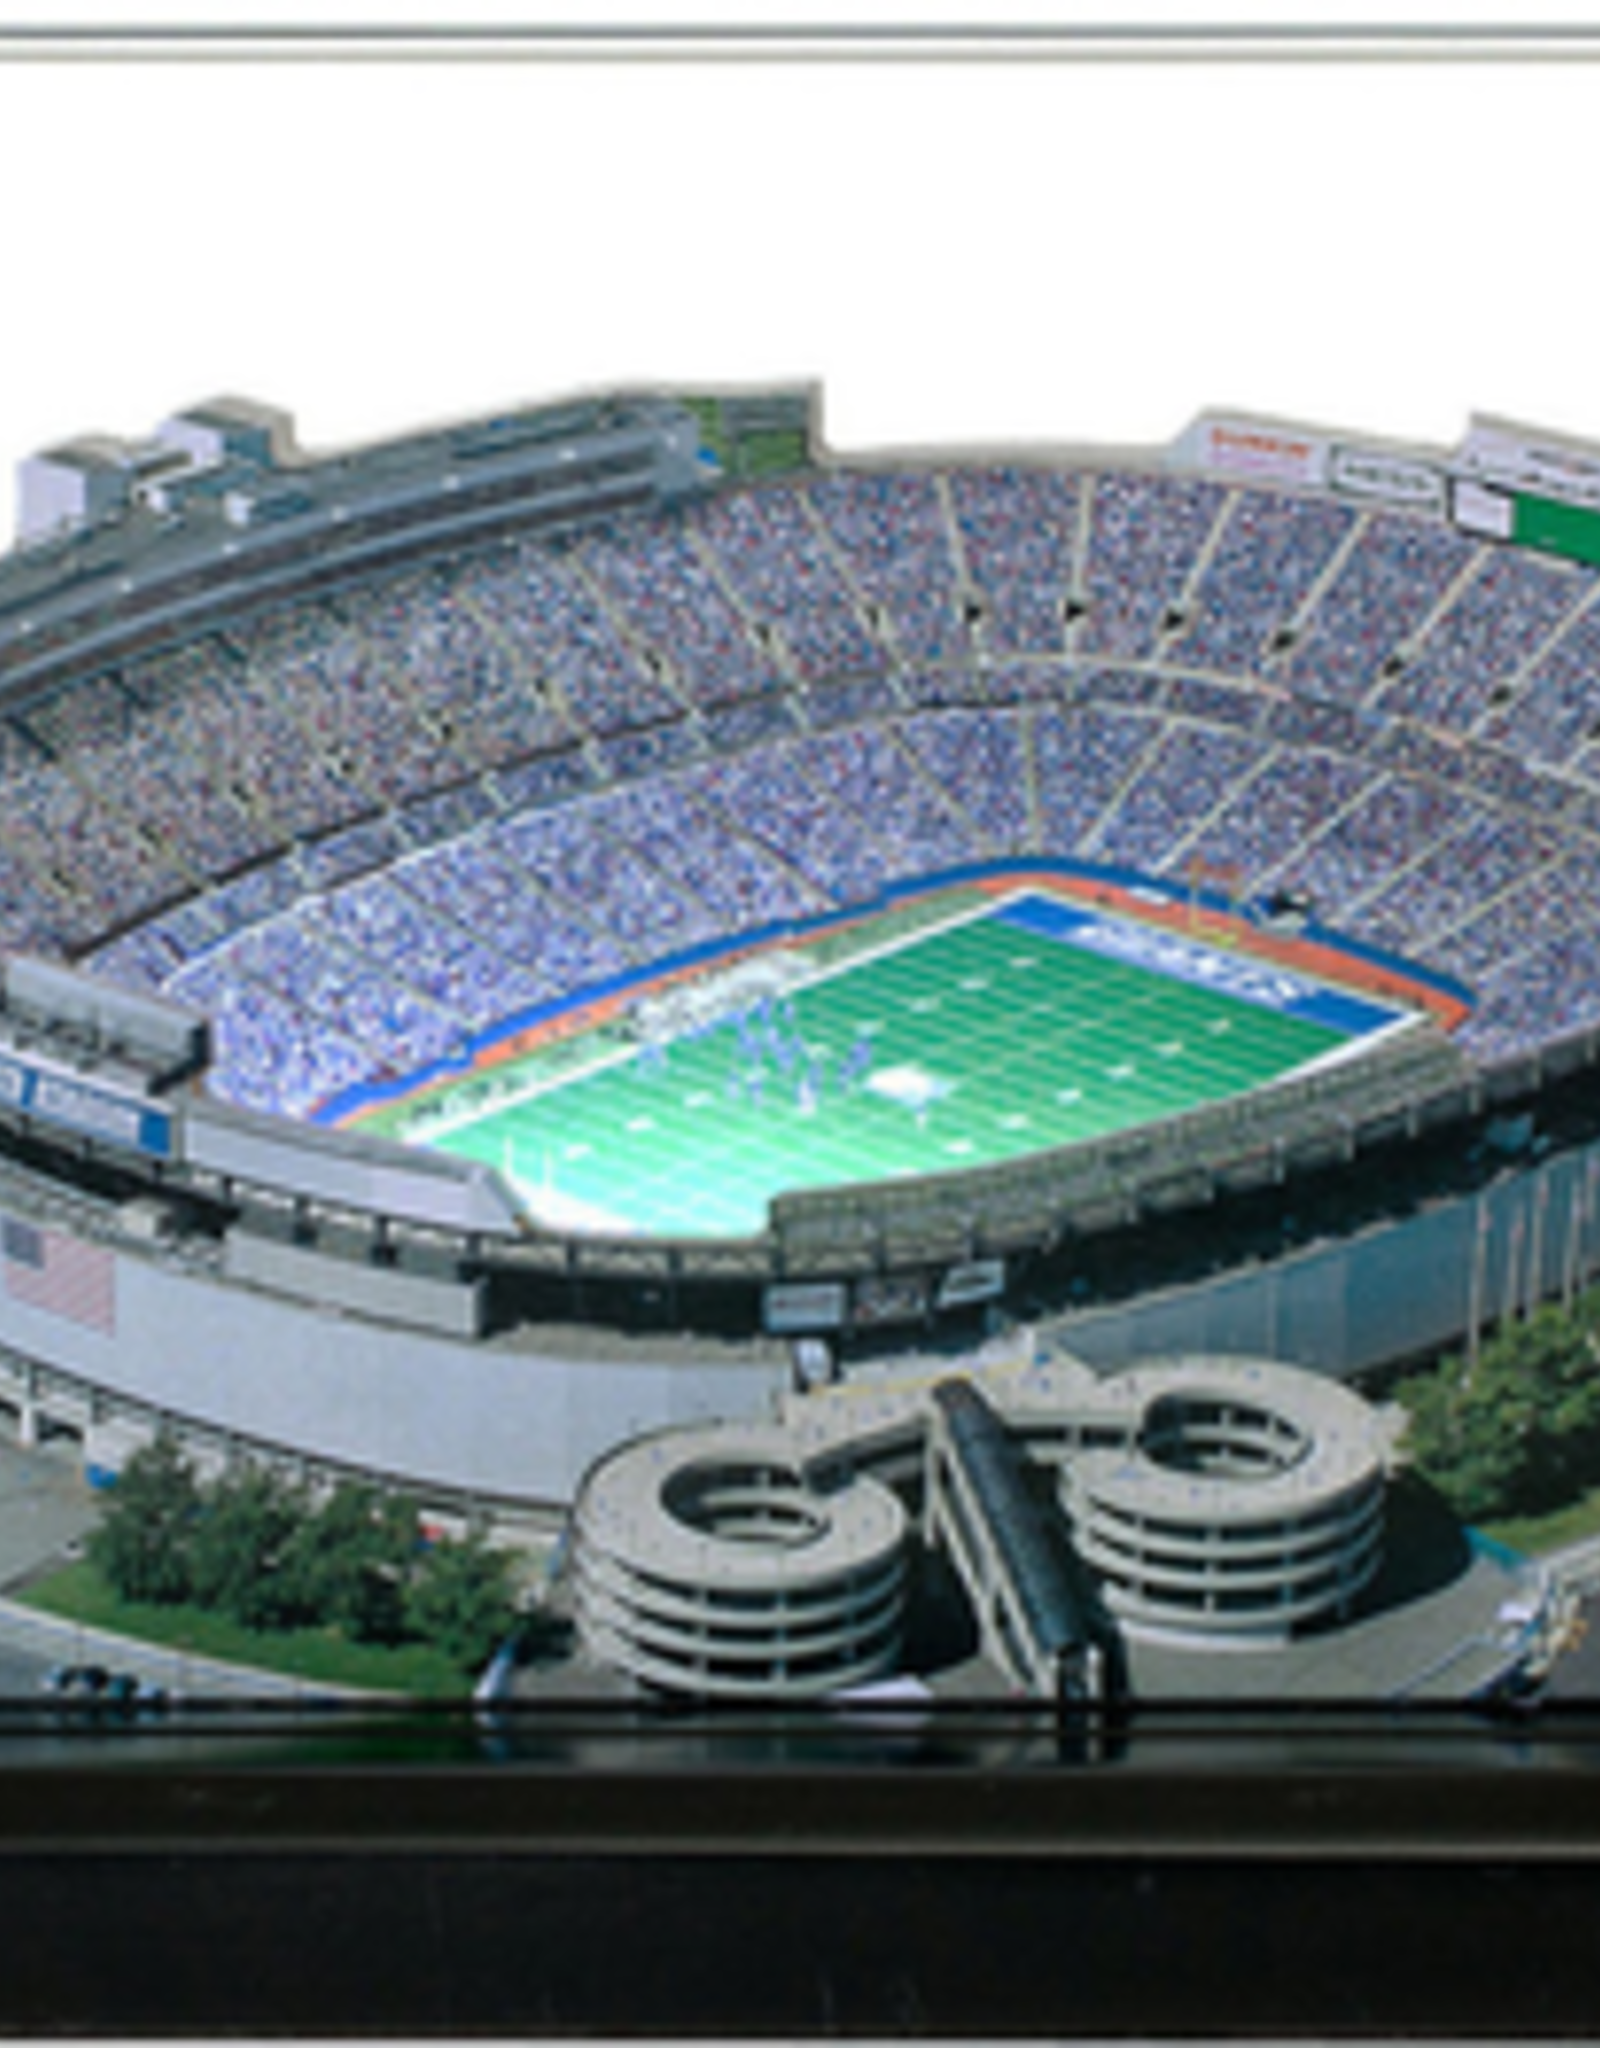 HOMEFIELDS Giants HomeField - Giants Stadium (1976-2009) 19IN